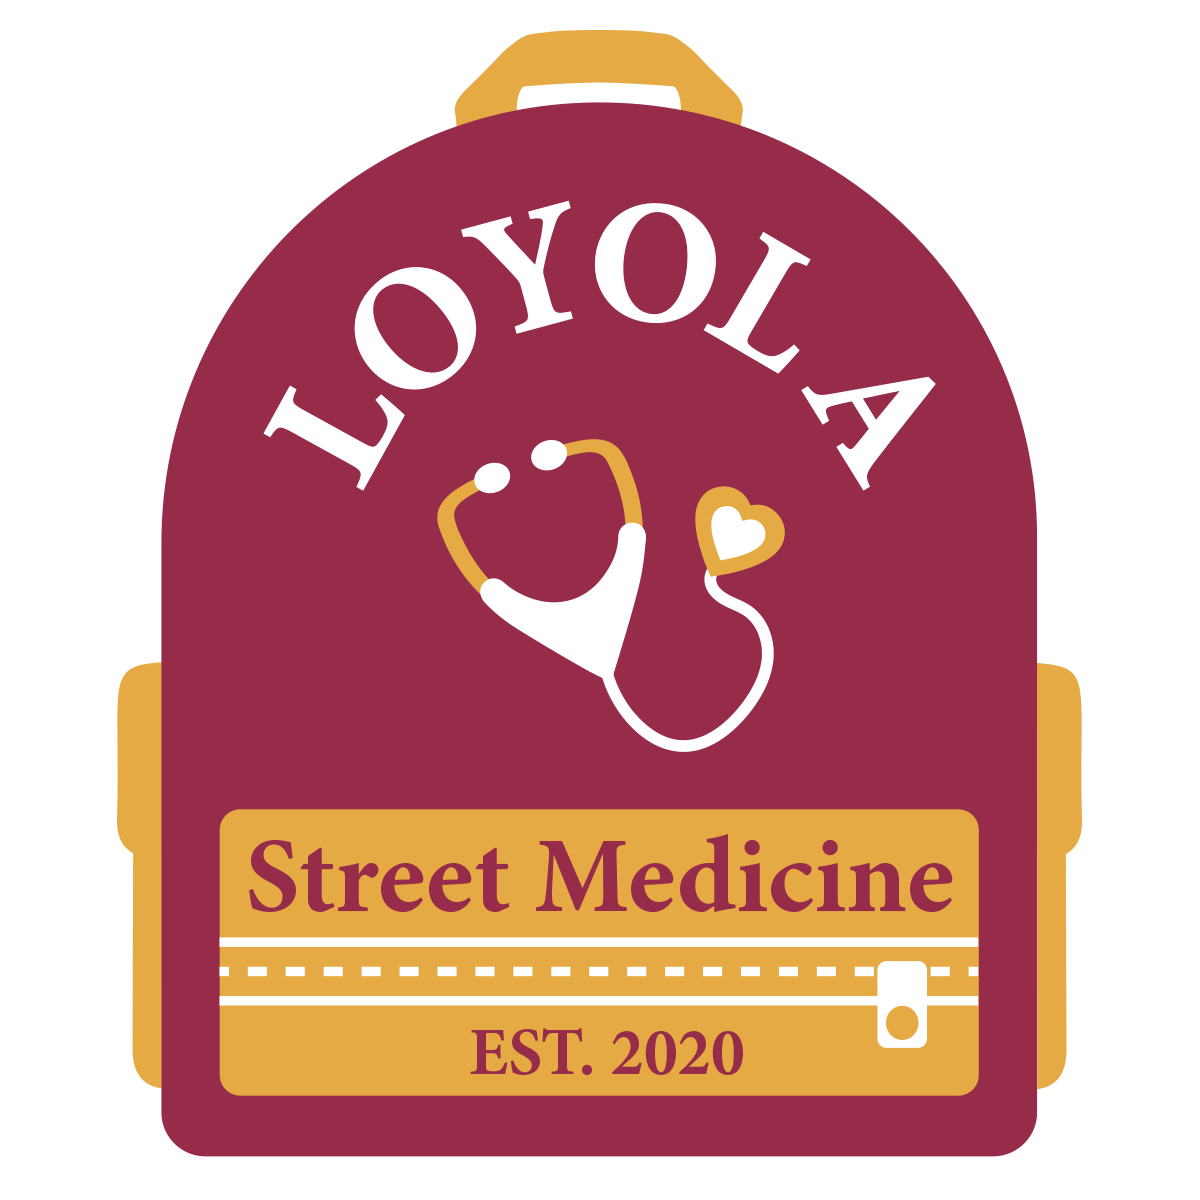 Loyola Street Medicine